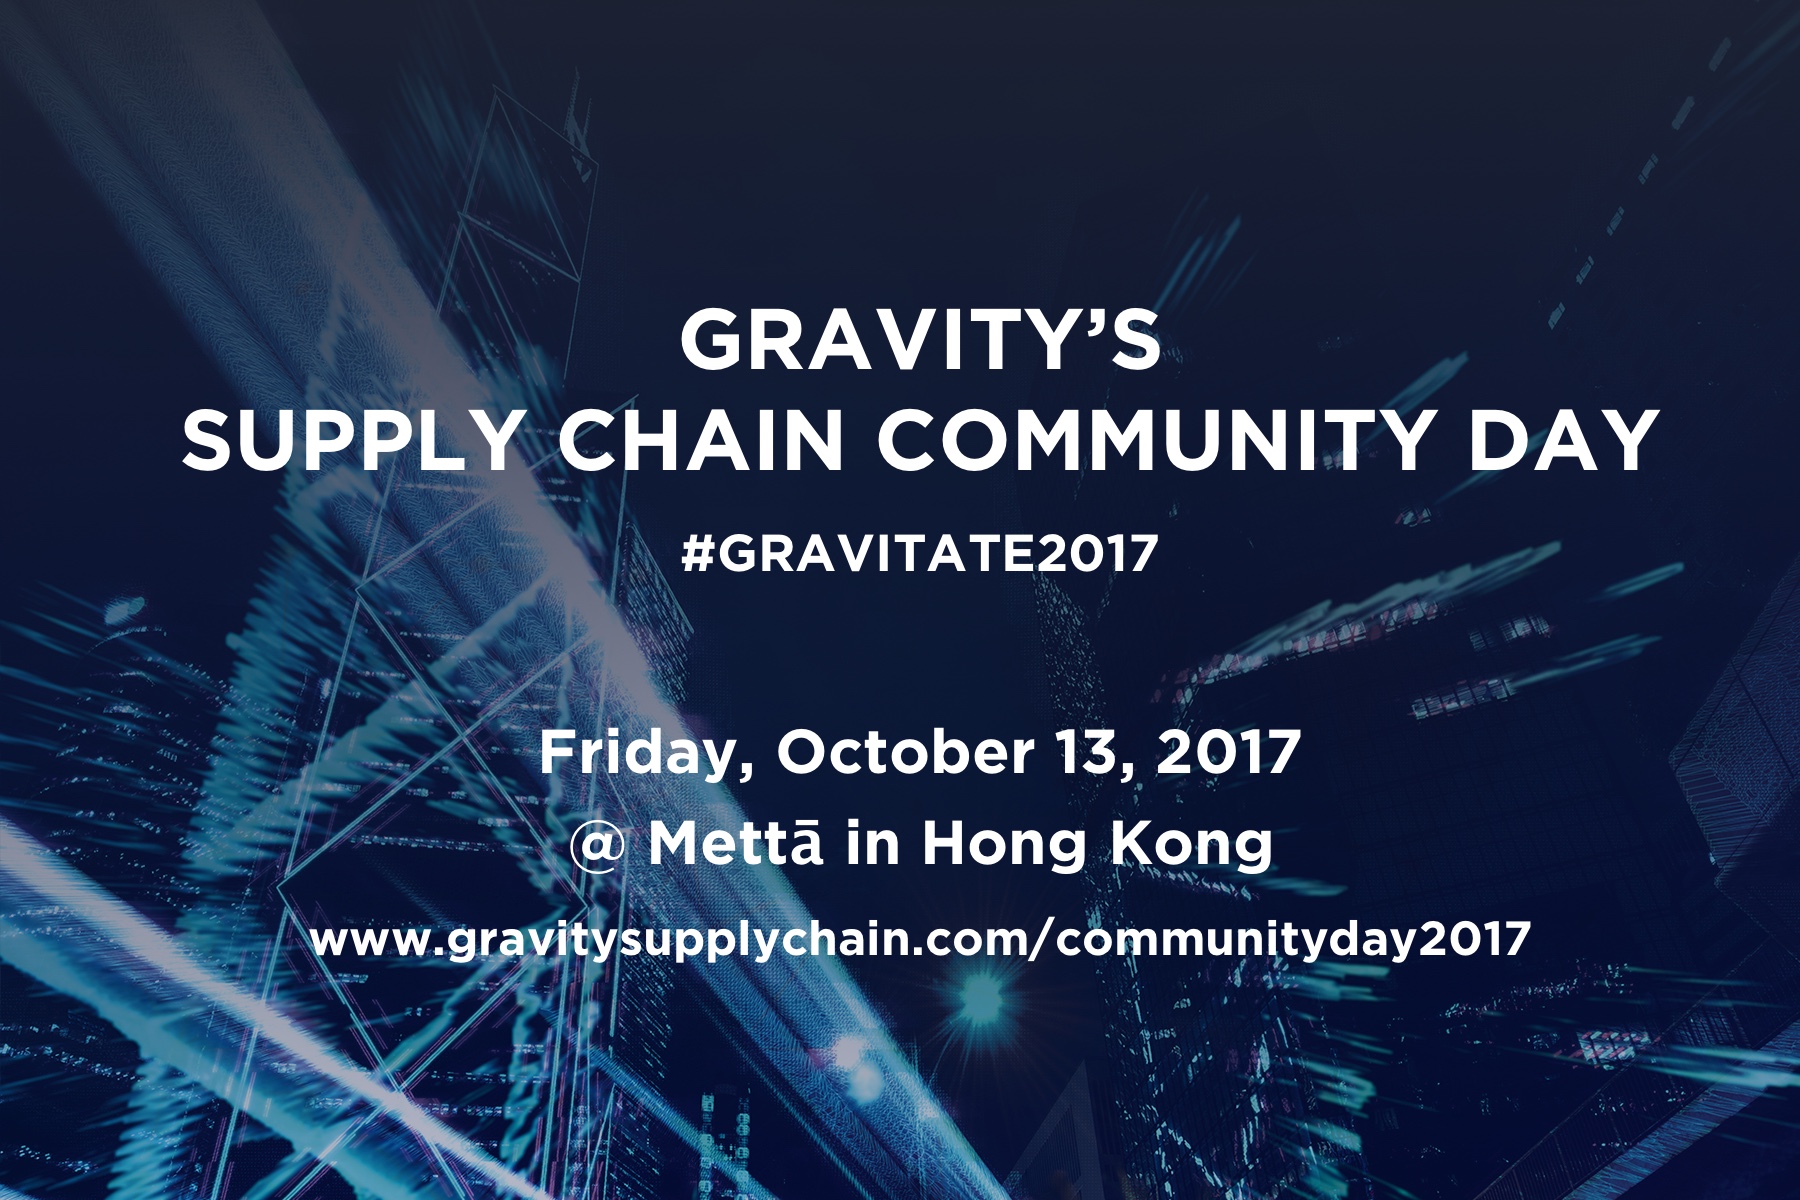 Gravity's Supply Chain Community Day - Gravitate 2017